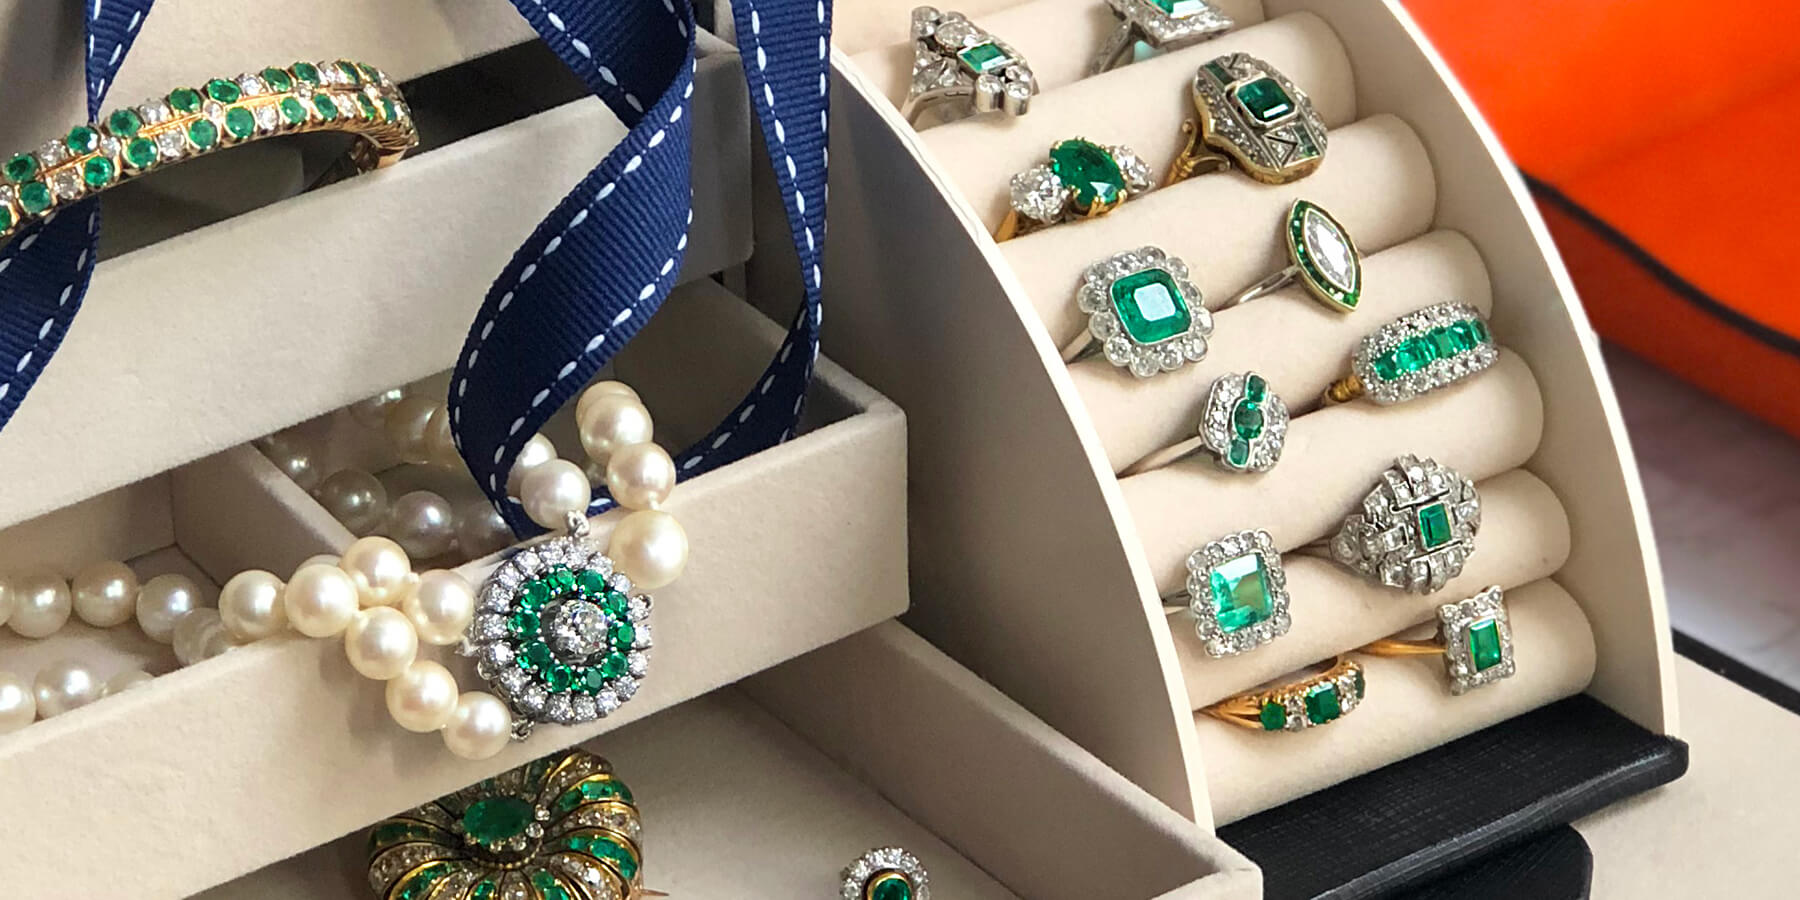 Antique emerald jewellery